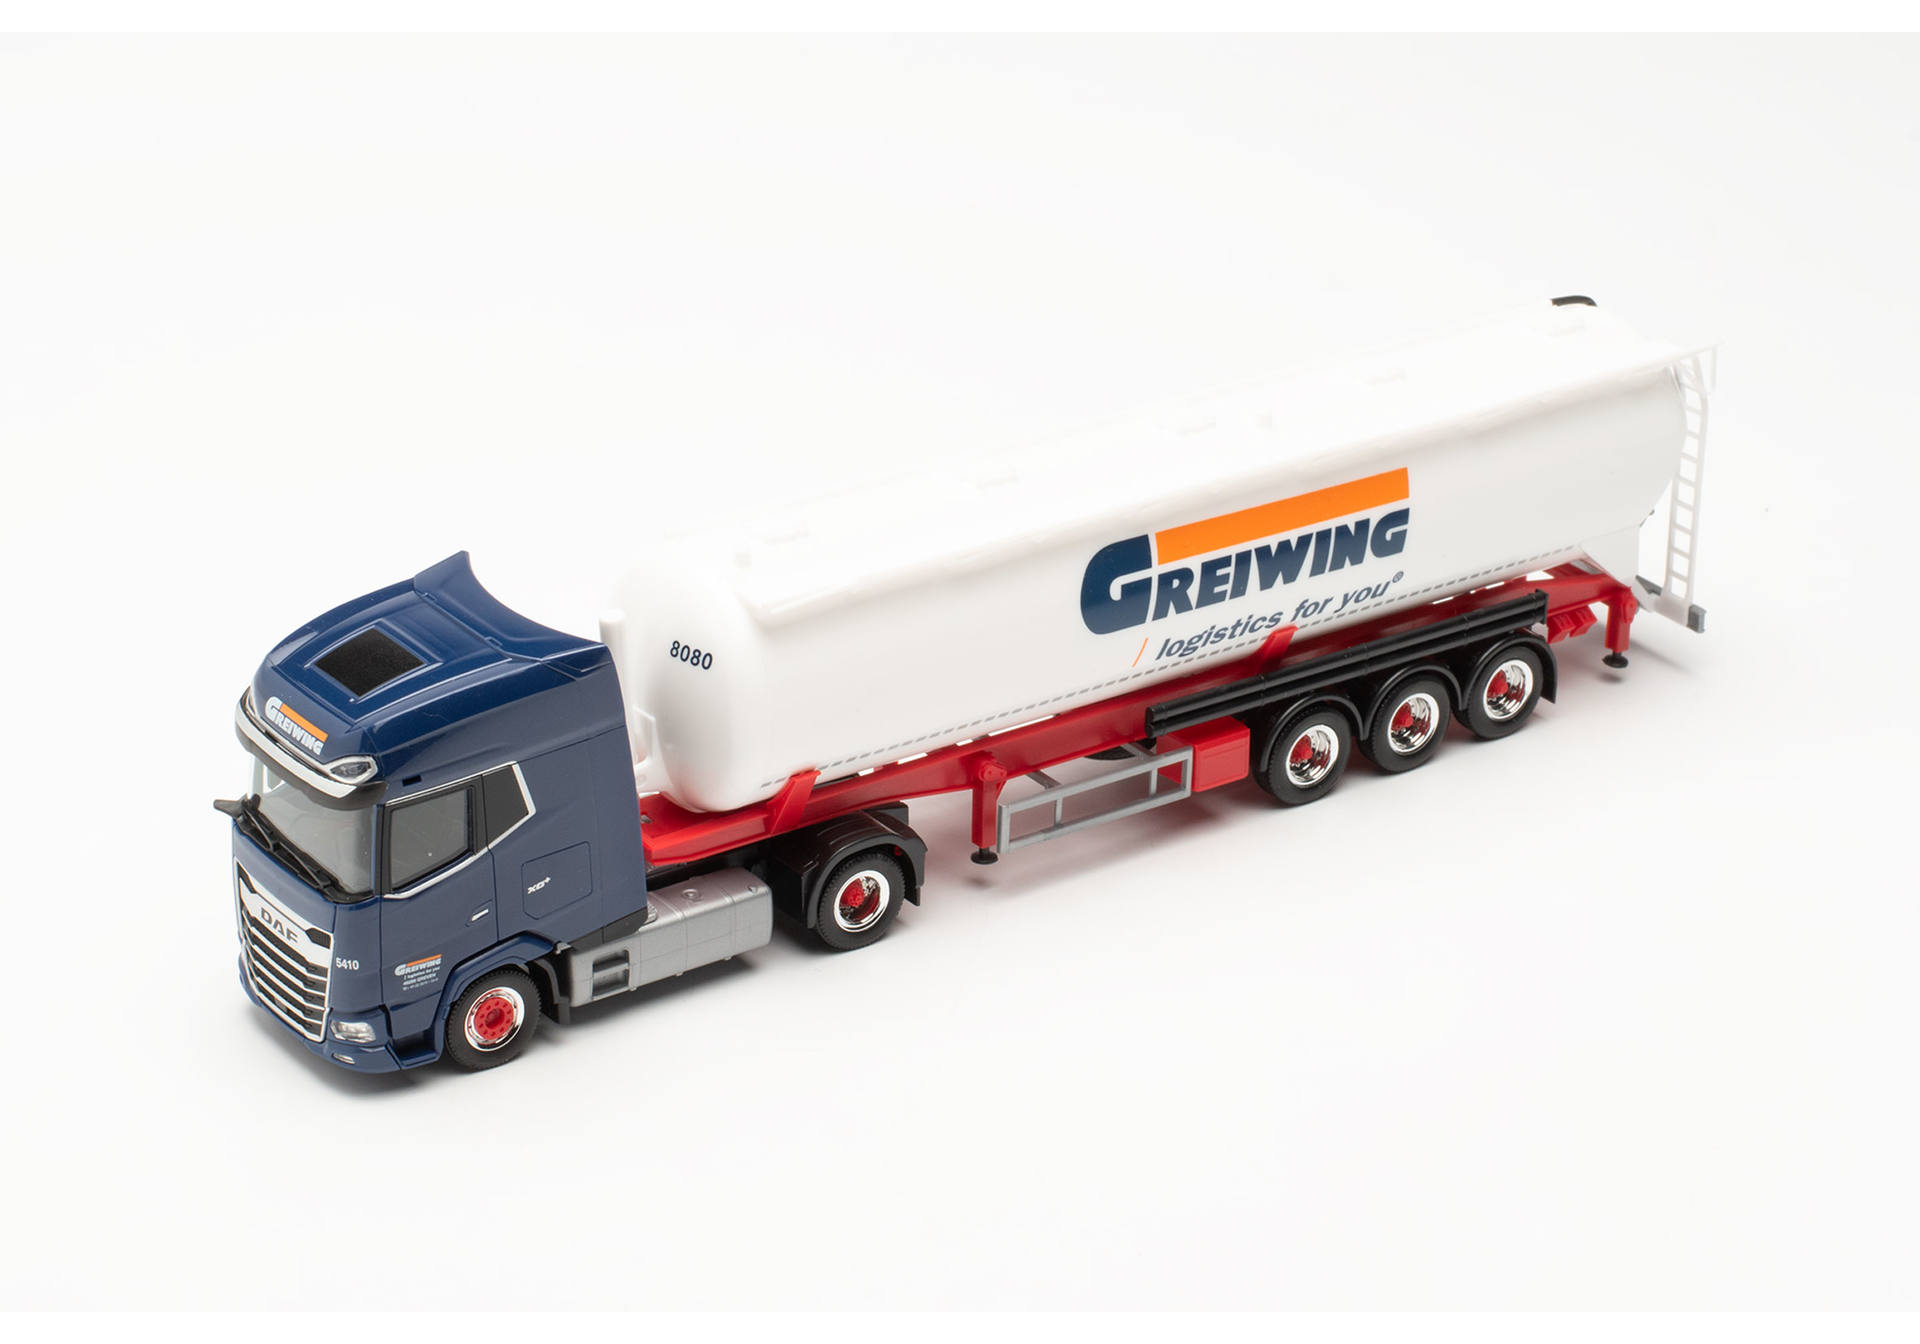 DAF XG Plus HD silo semitrailer truck Feldbinder 60m³ Non Food „Greiwing” 